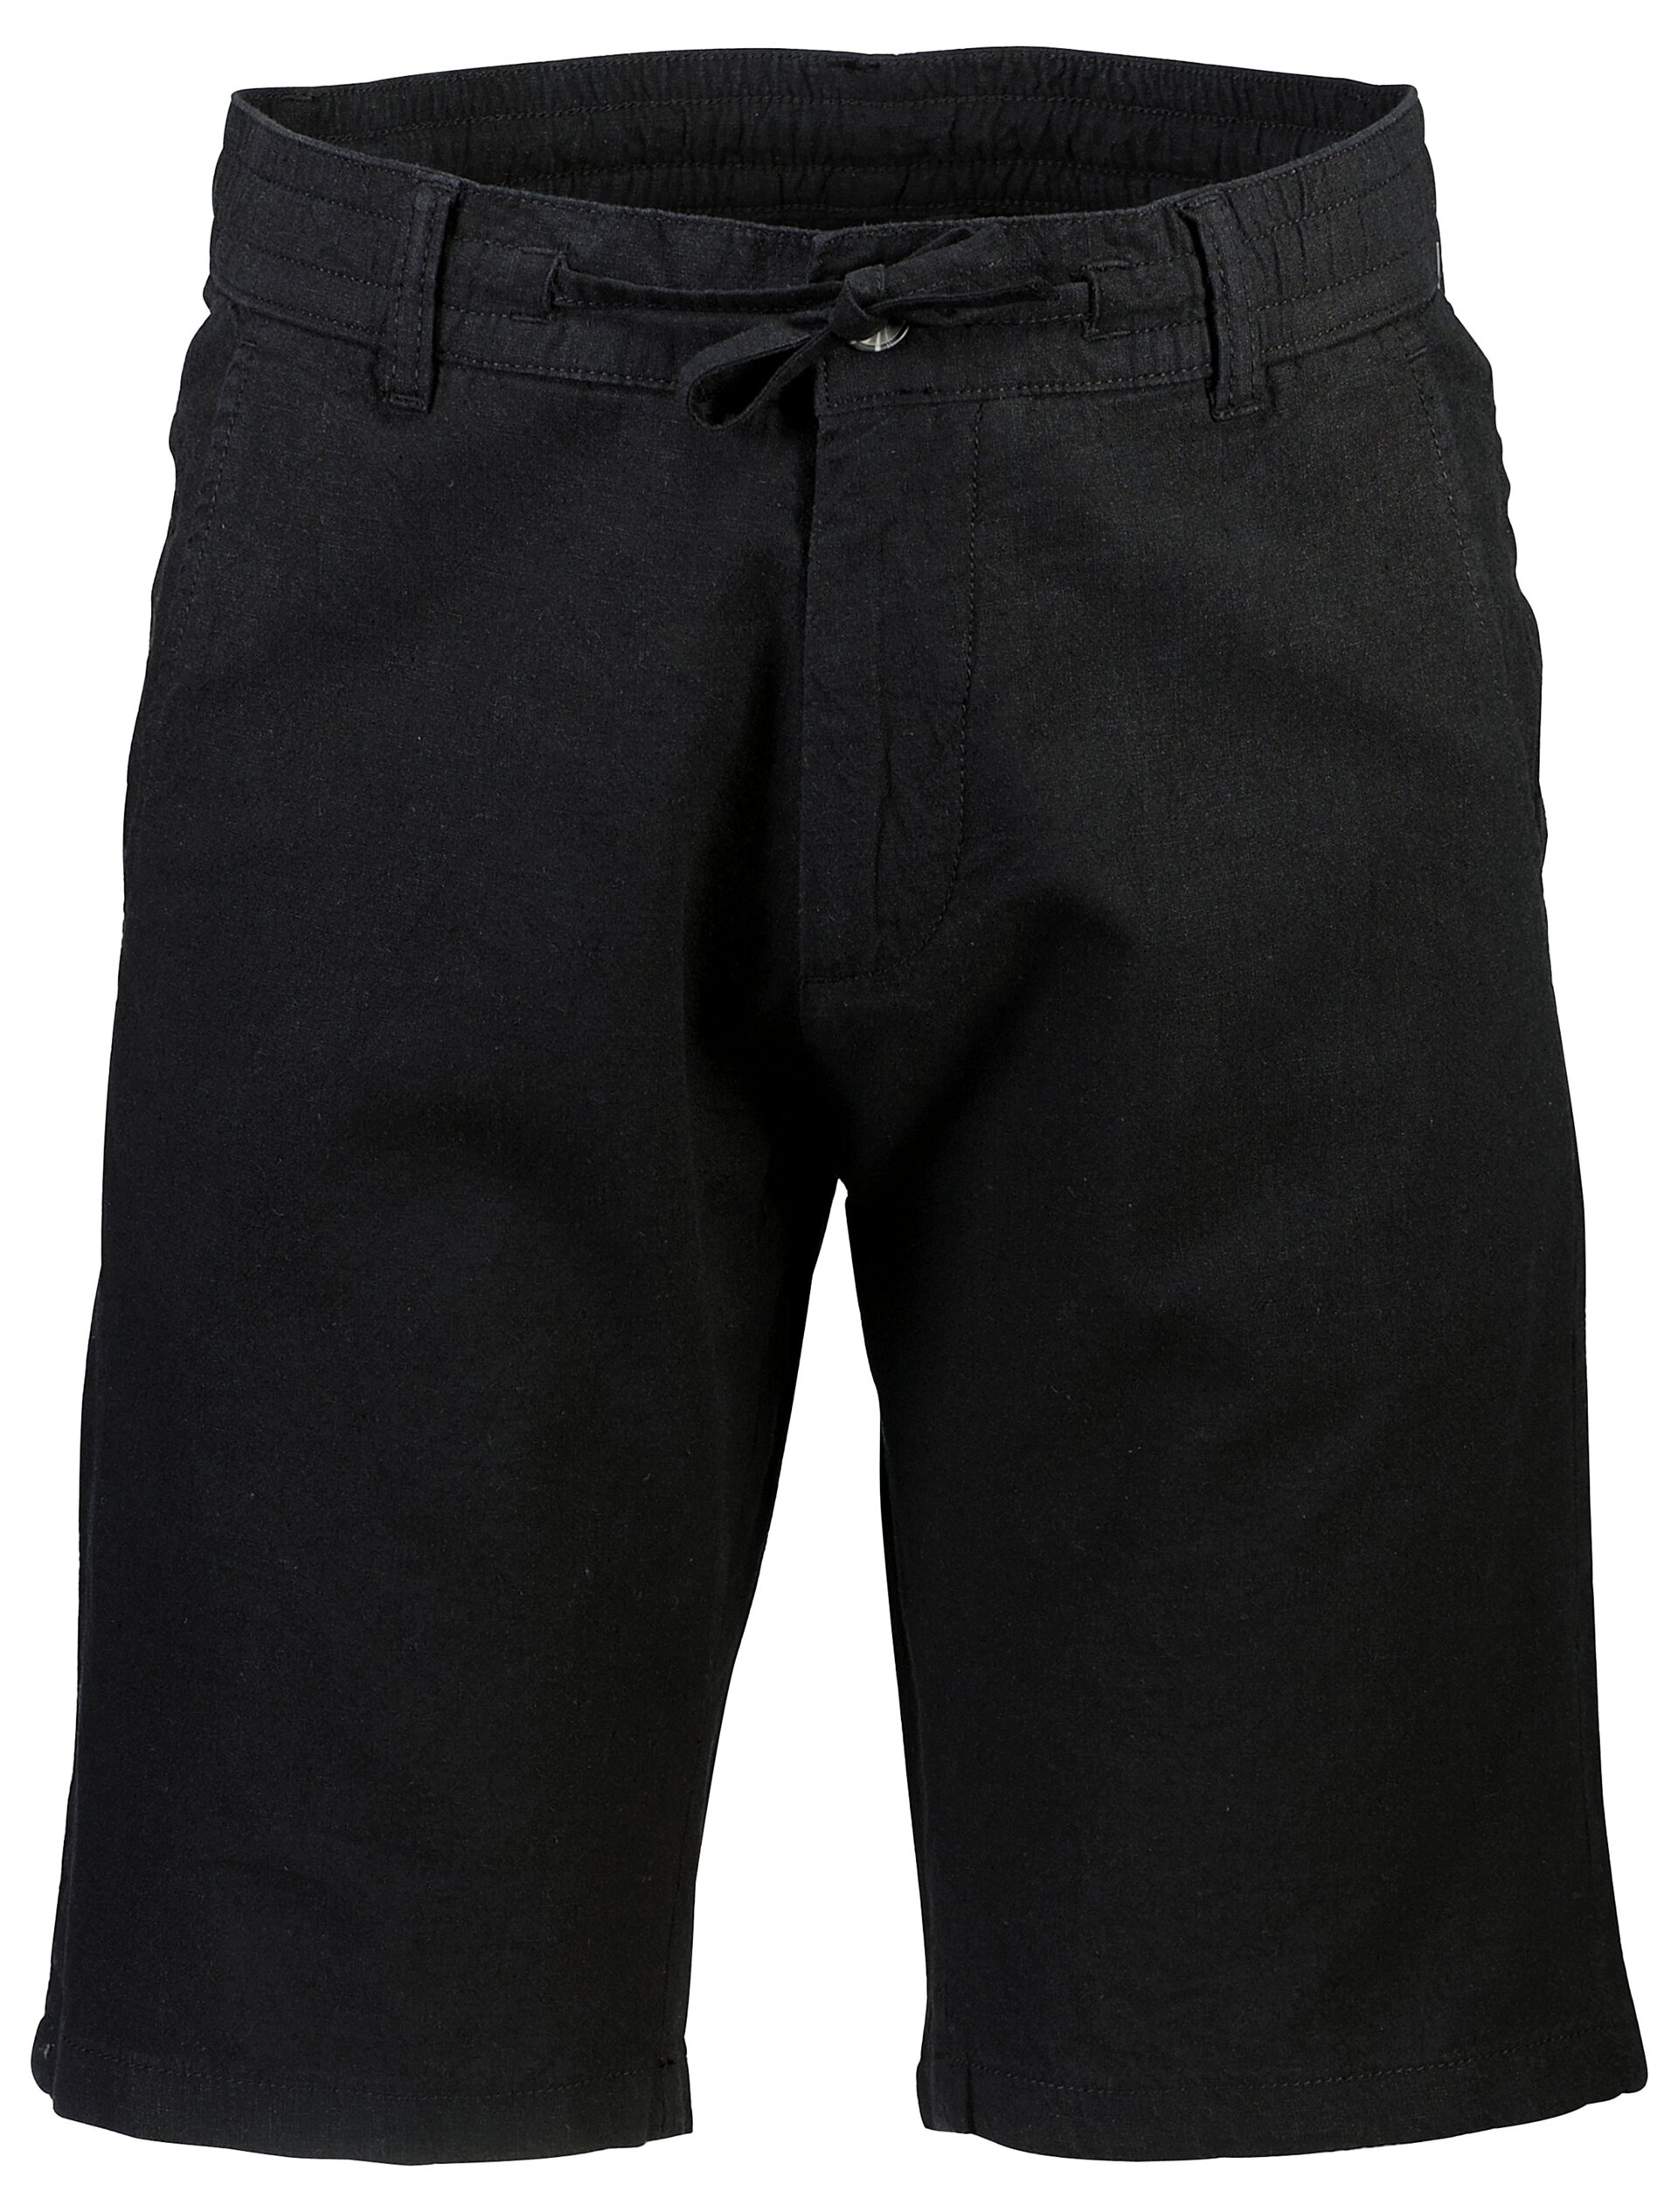 Lindbergh Linen shorts black / black